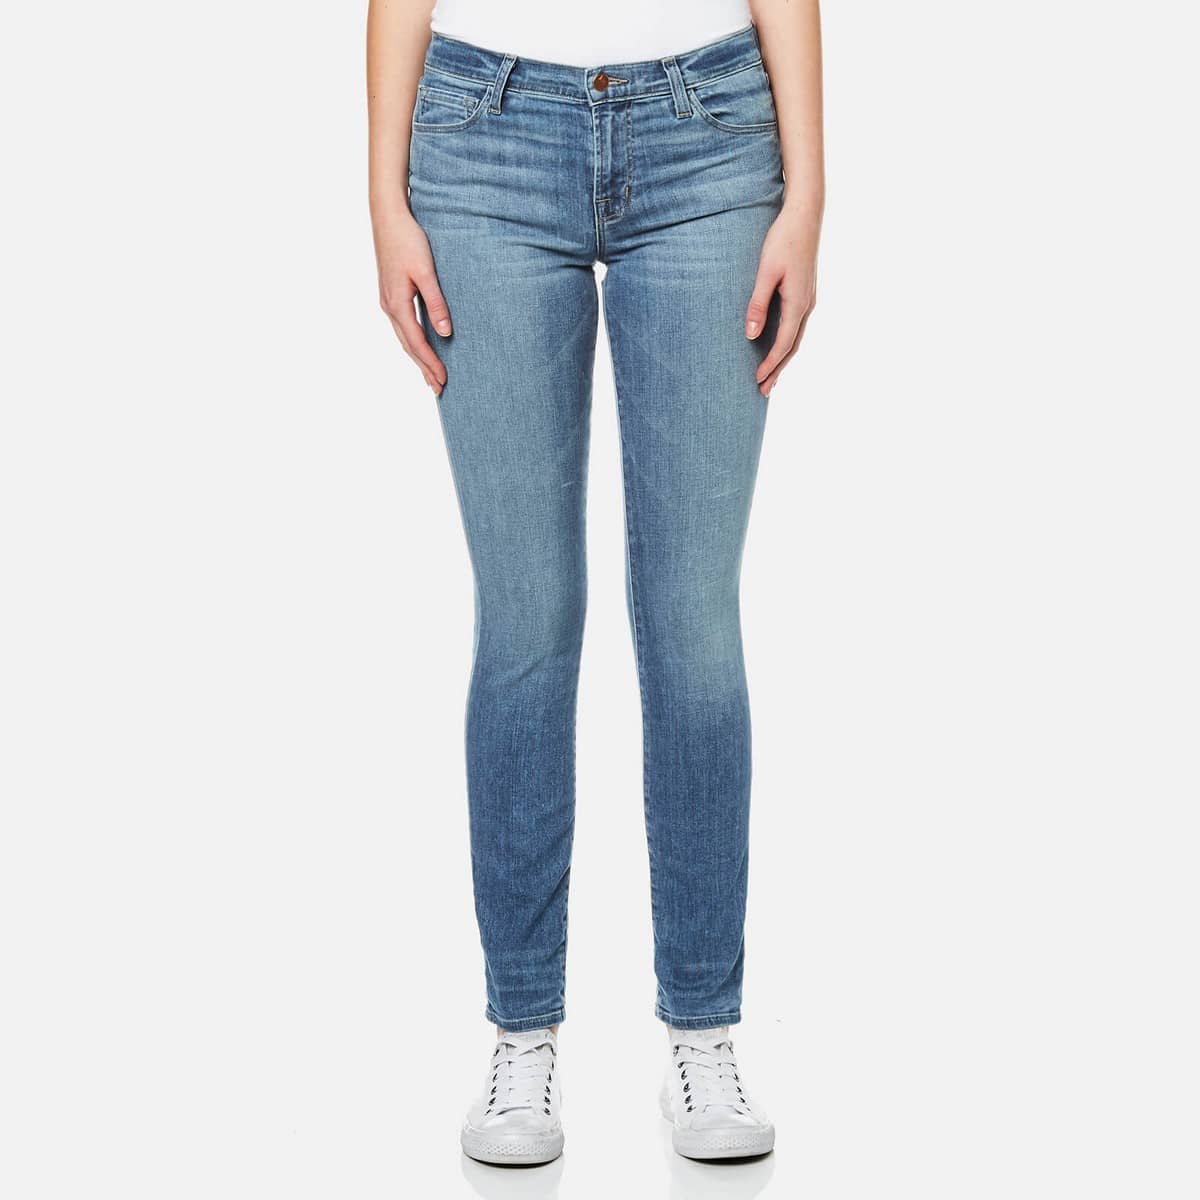 samenzwering resterend peper J Brand • blauwe skinny leg mid-rise jeans • shop BollyWolly